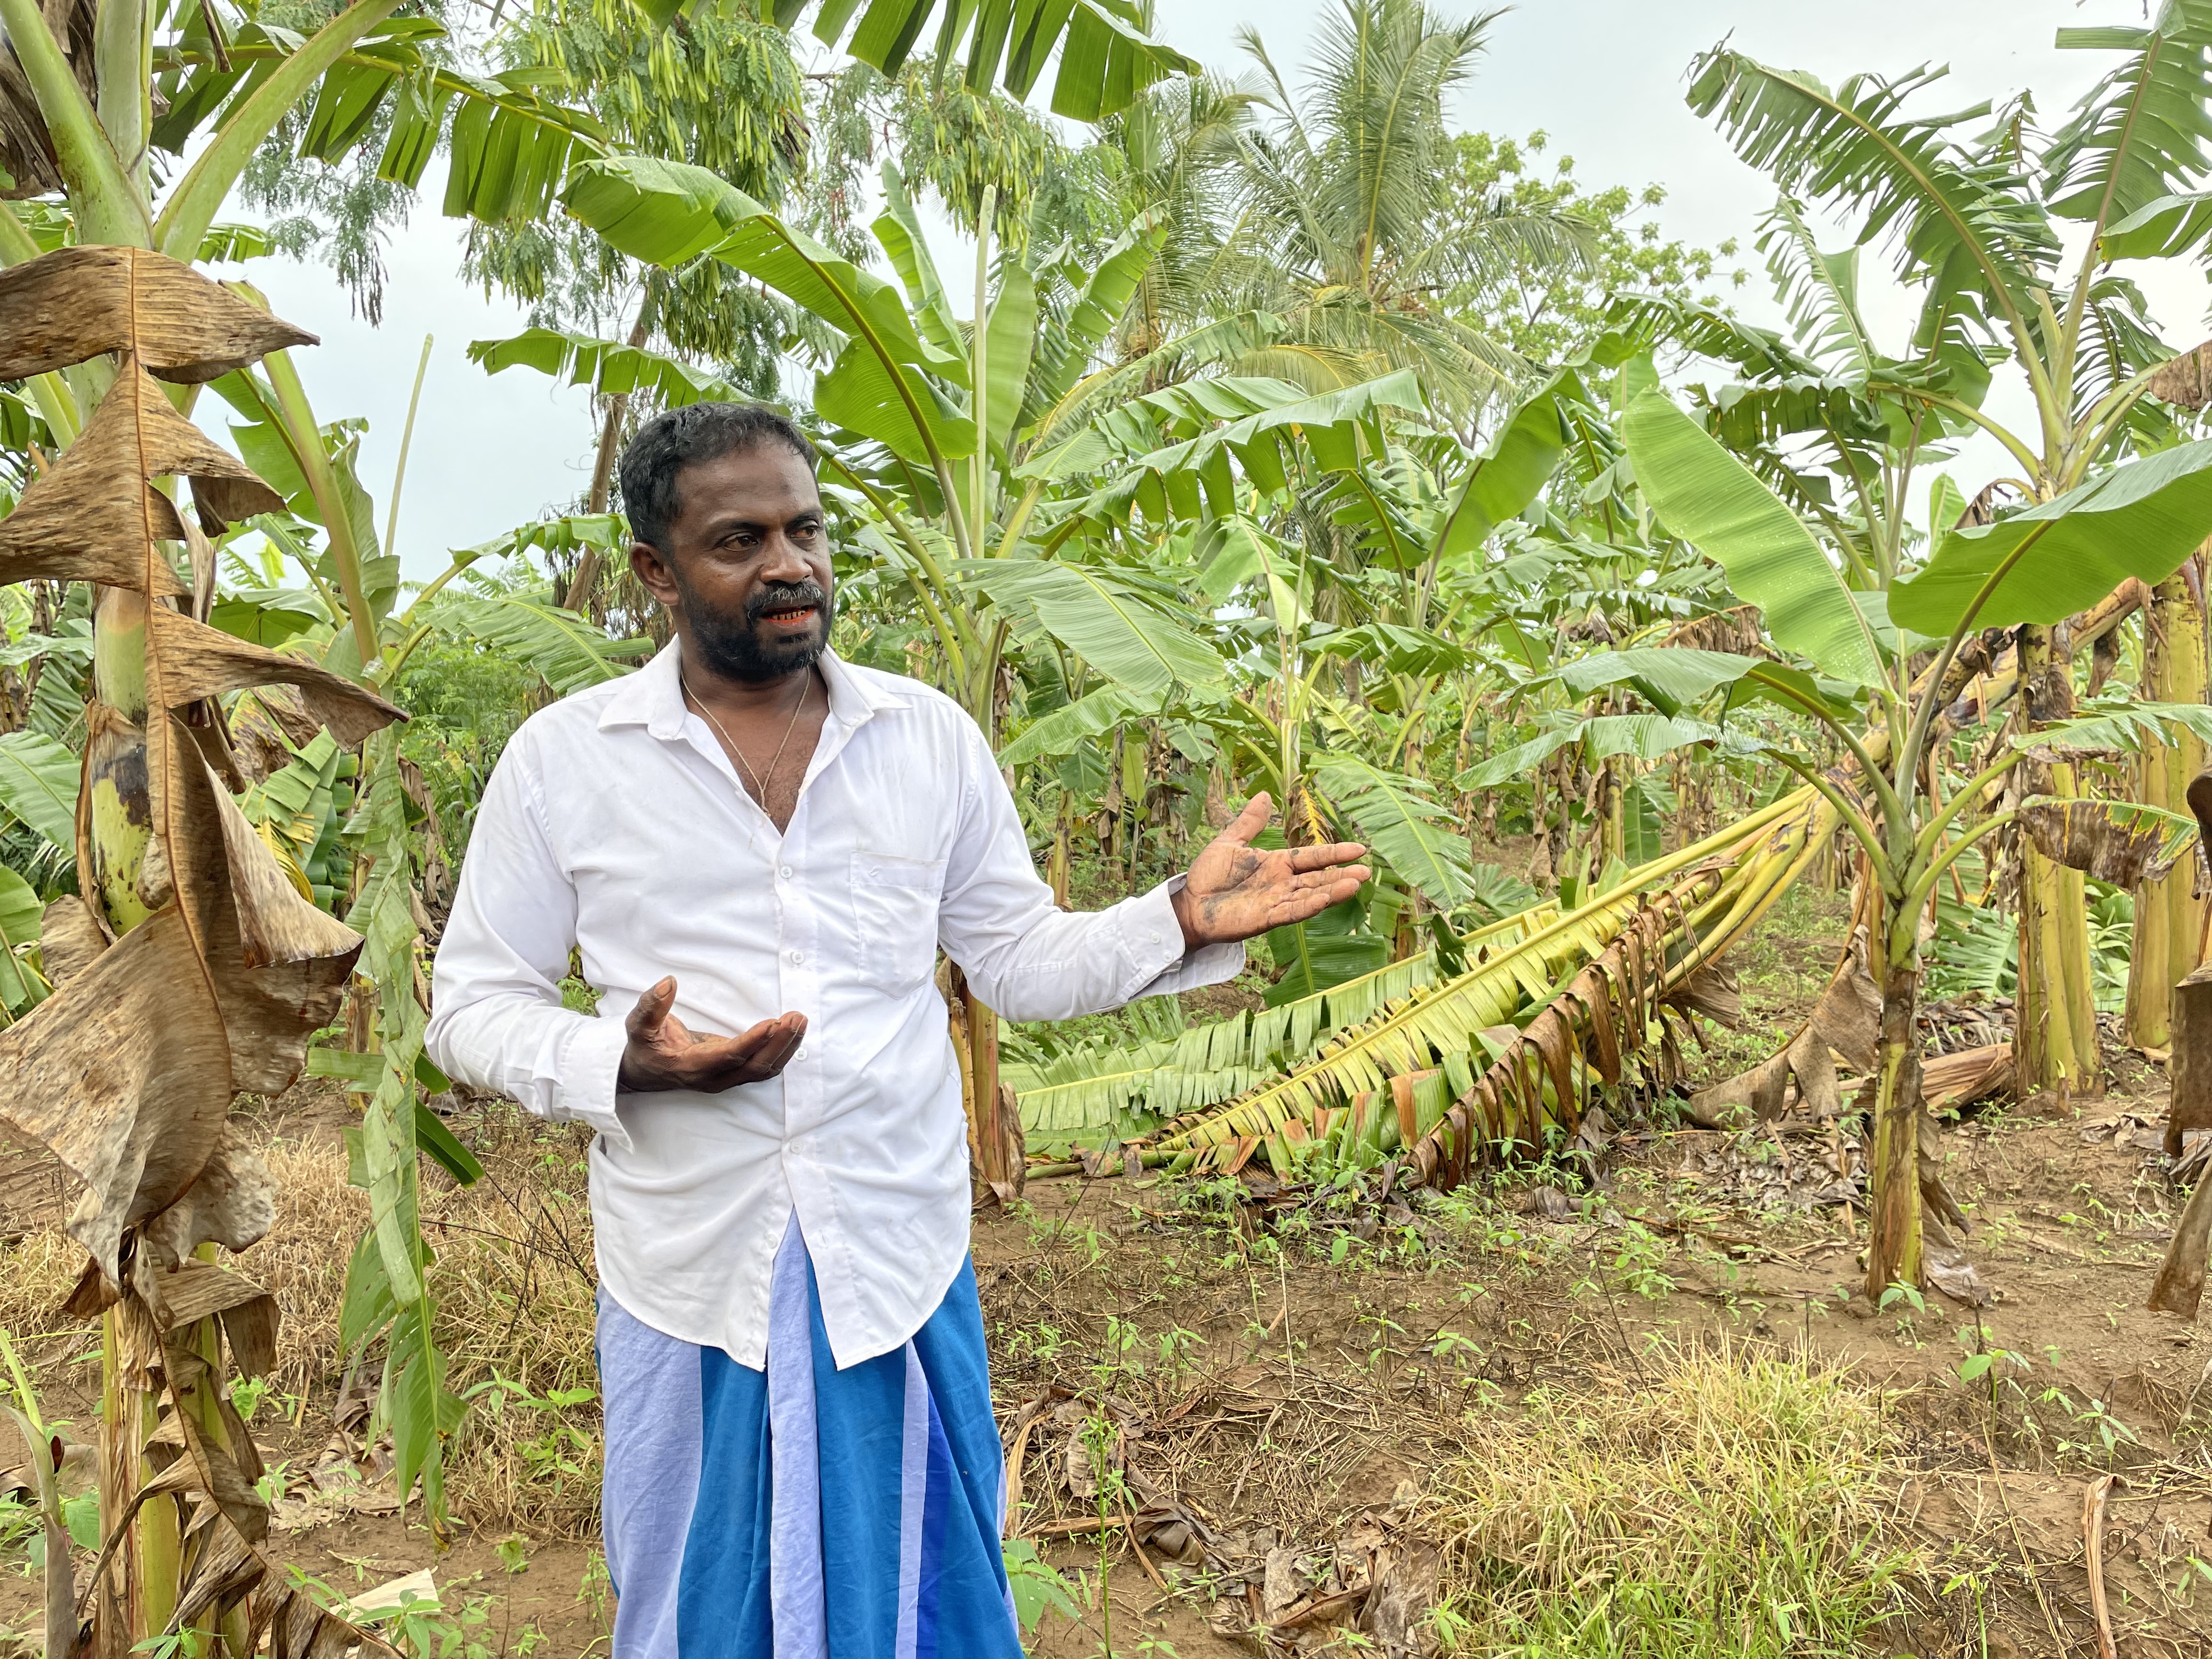 aljazeera.com - Zaheena Rasheed - Sri Lanka faces 'man-made' food crisis as farmers stop planting